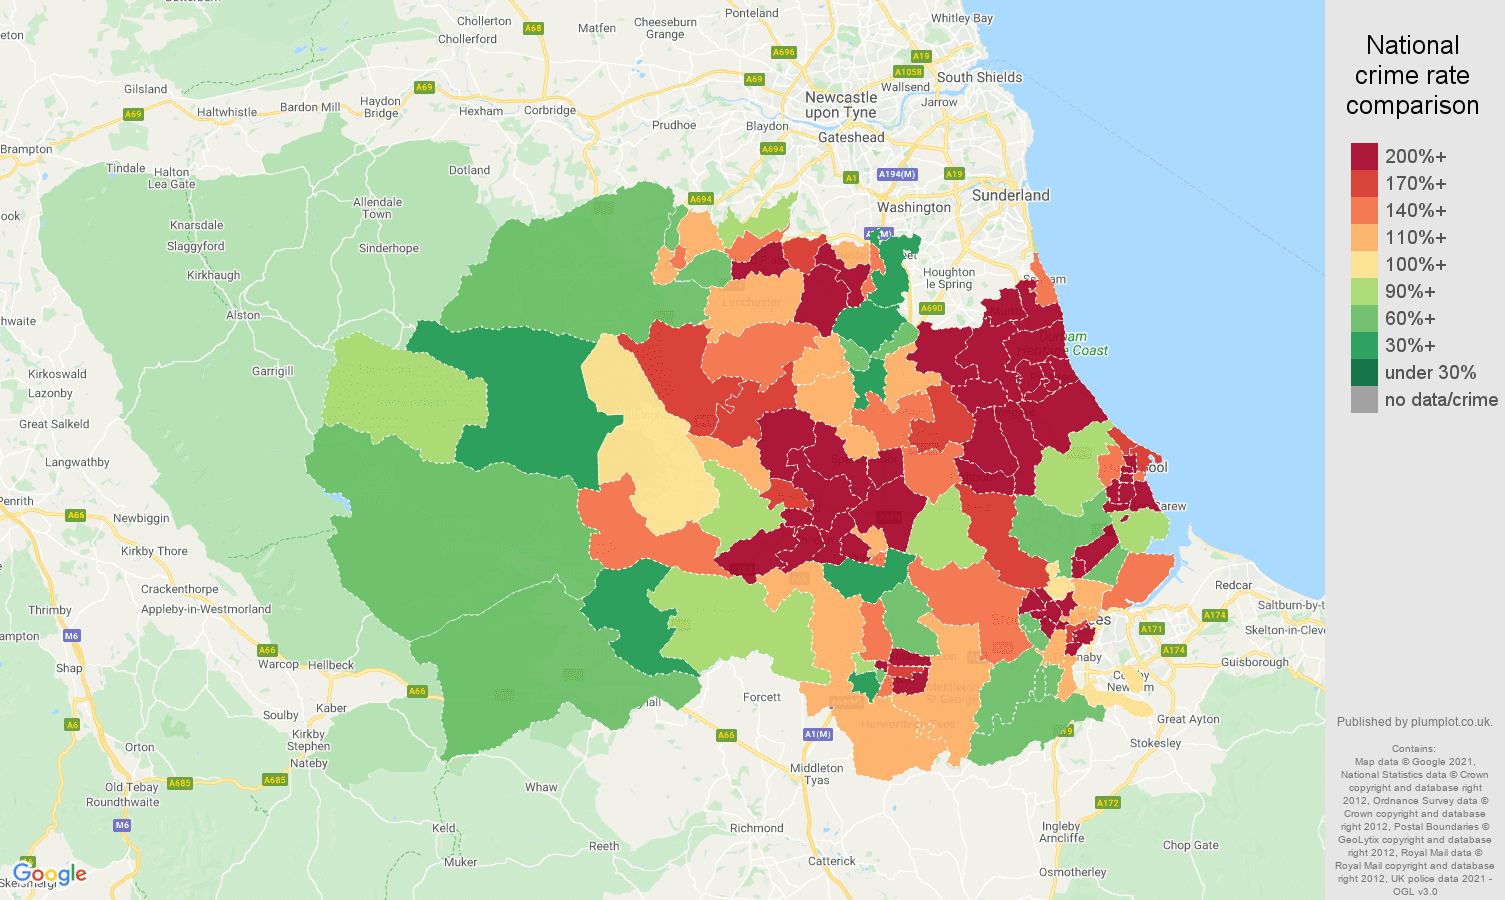 Durham county criminal damage and arson crime rate comparison map